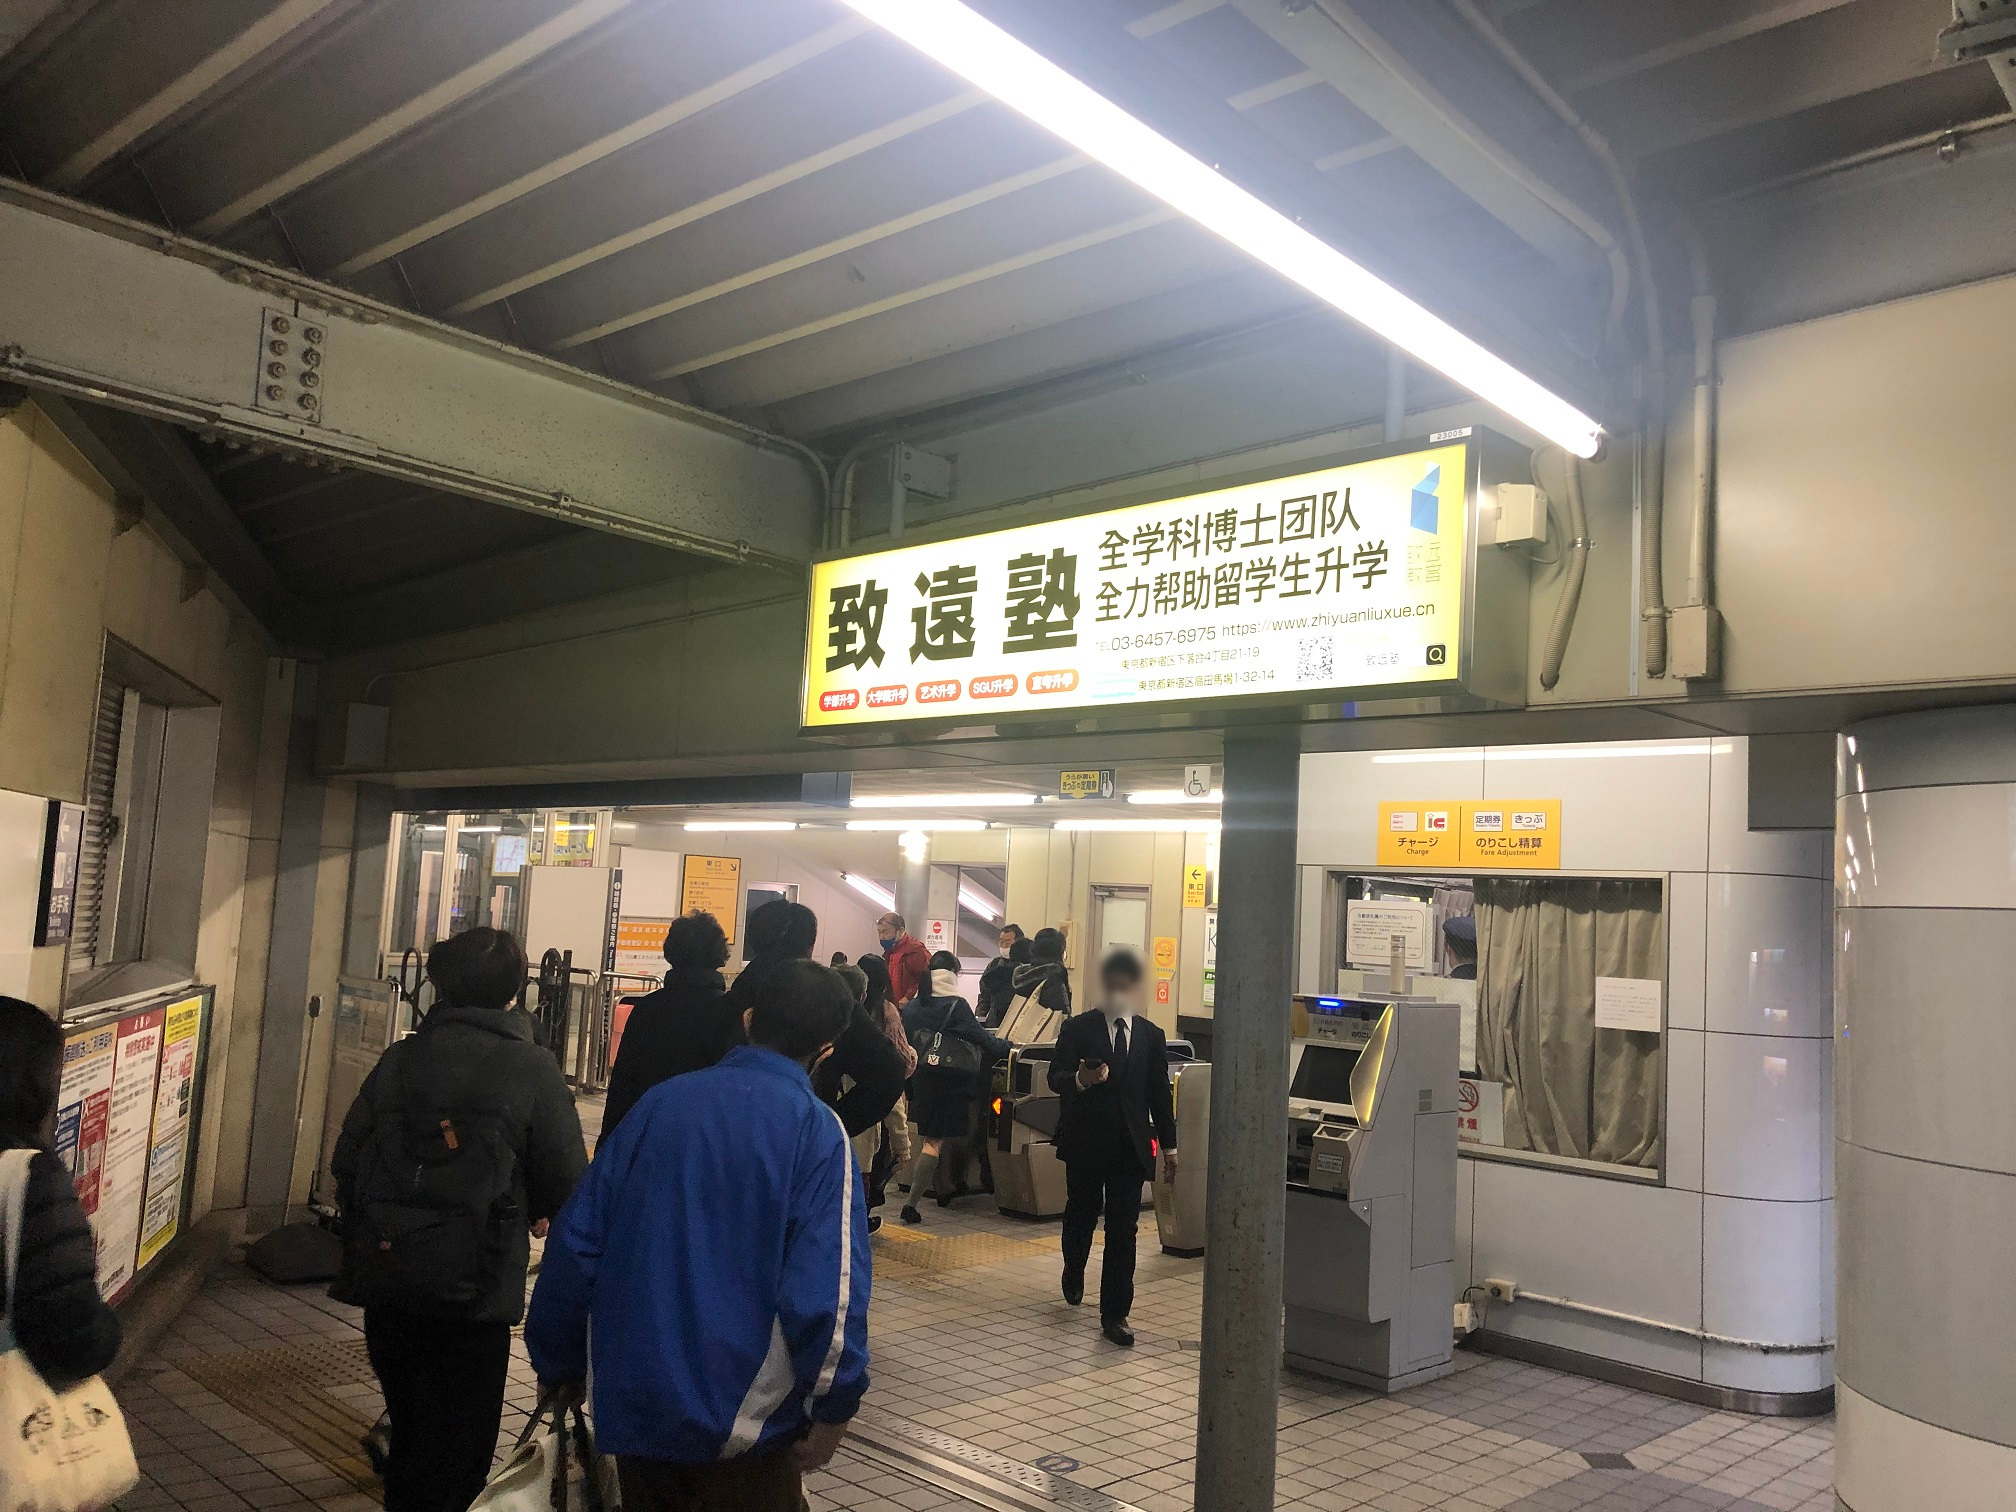 京急 生麦駅の駅看板広告